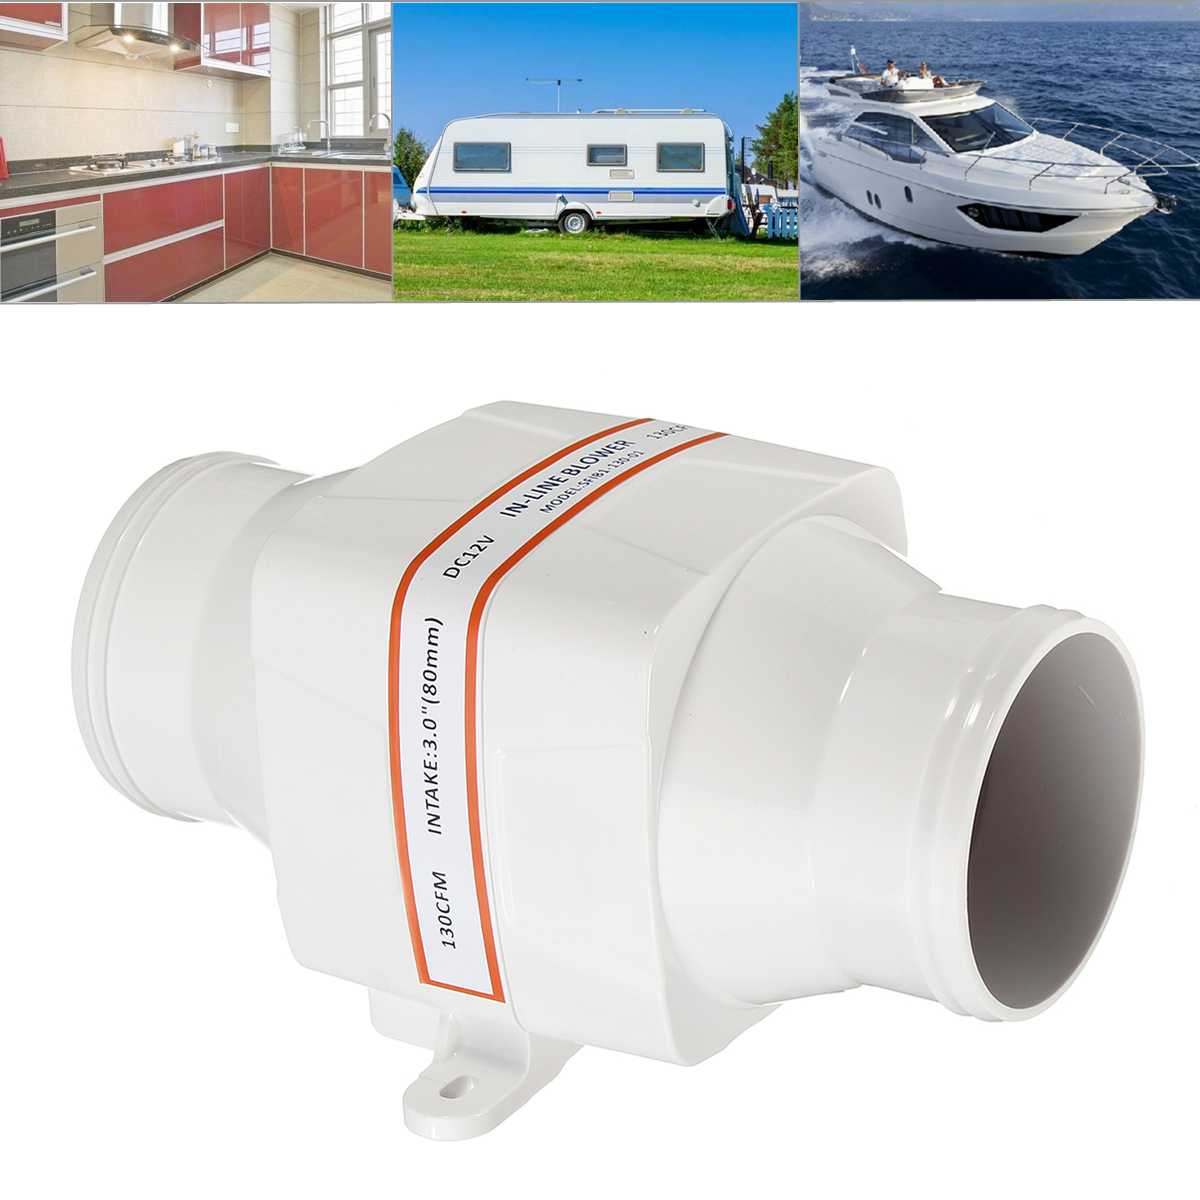 12V 130CFM 3 Inch In Line Air Blower Boat Bilge Engine Galley Marine Ventilation Fan ABS Plastic Housing Moisture Protection